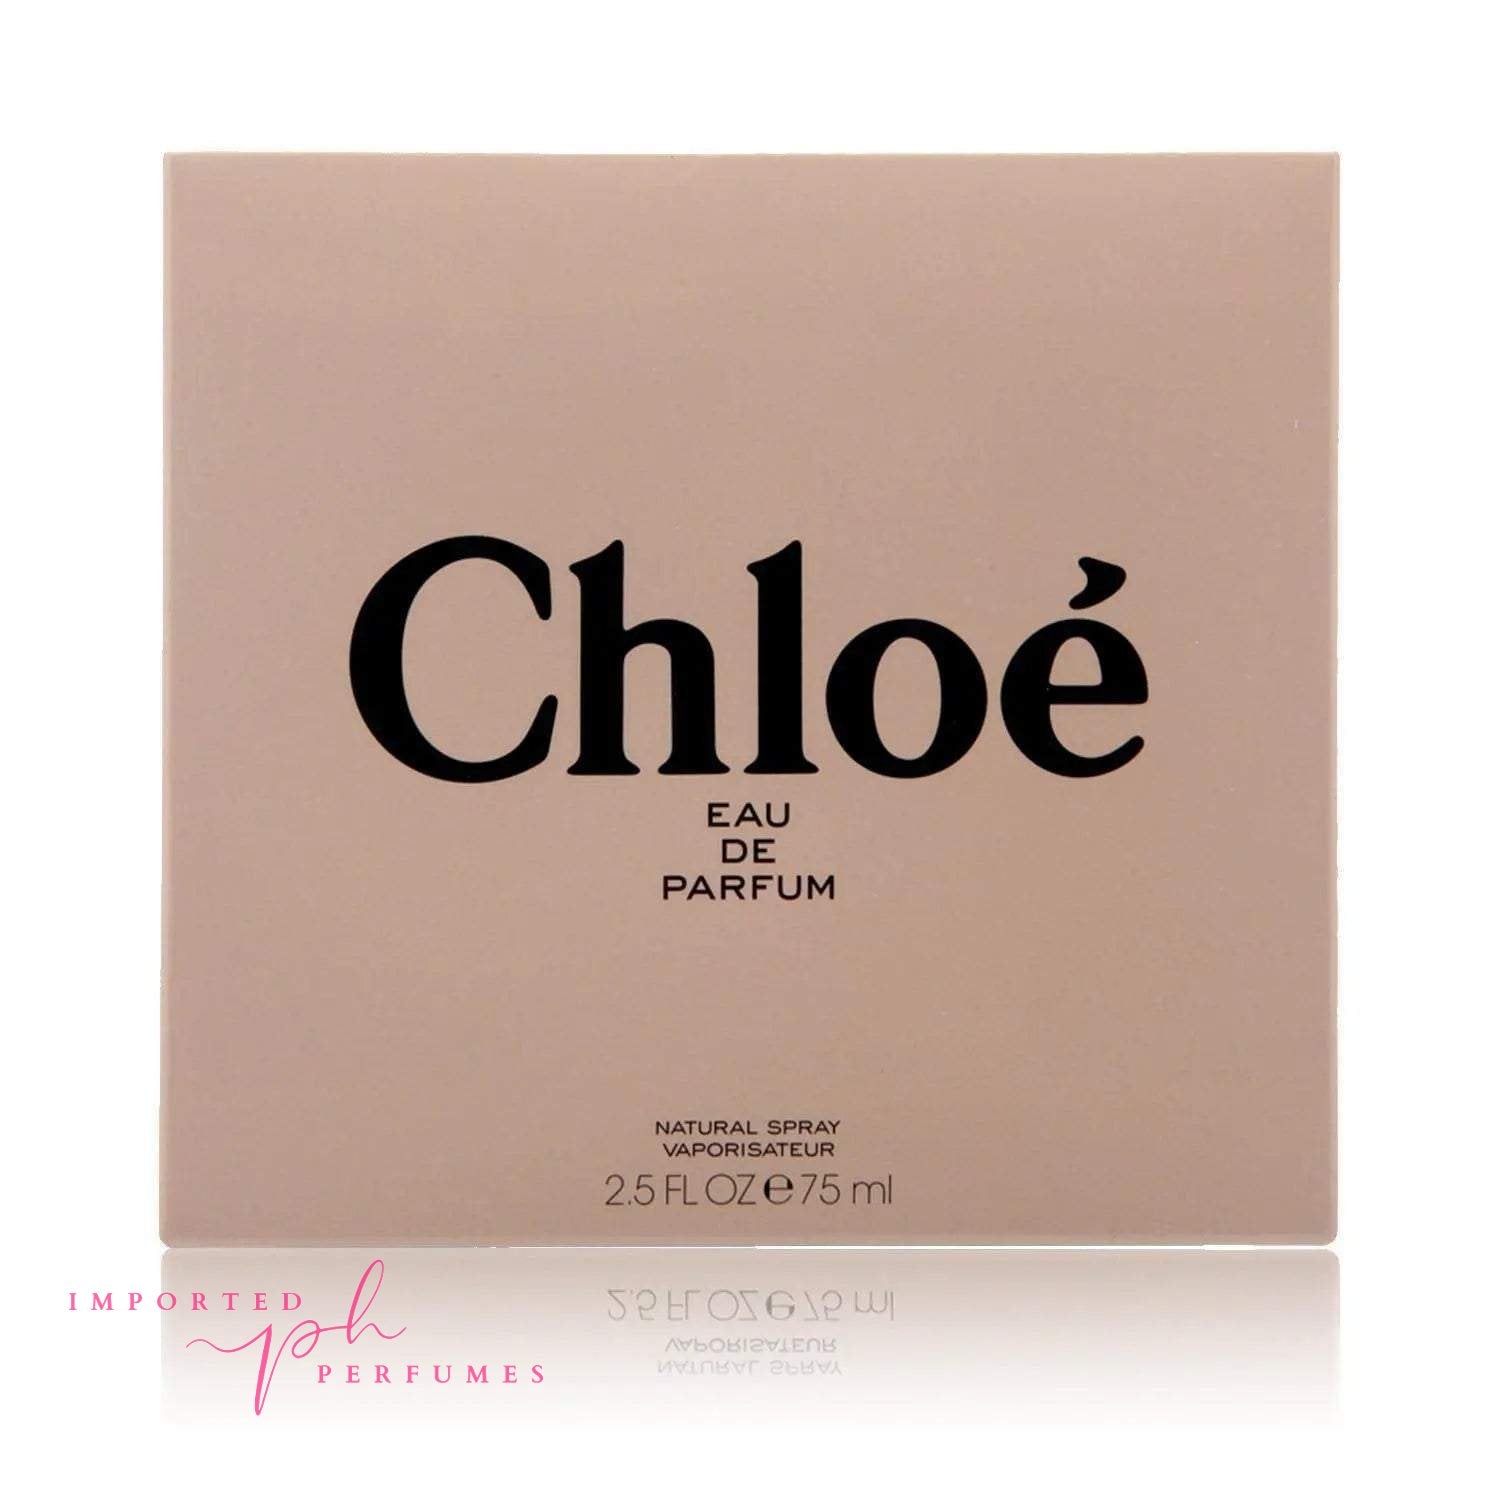 Chloe New for Women Eau De Parfum Spray 75ml-Imported Perfumes Co-75ml,Chloe,Chloe new,women